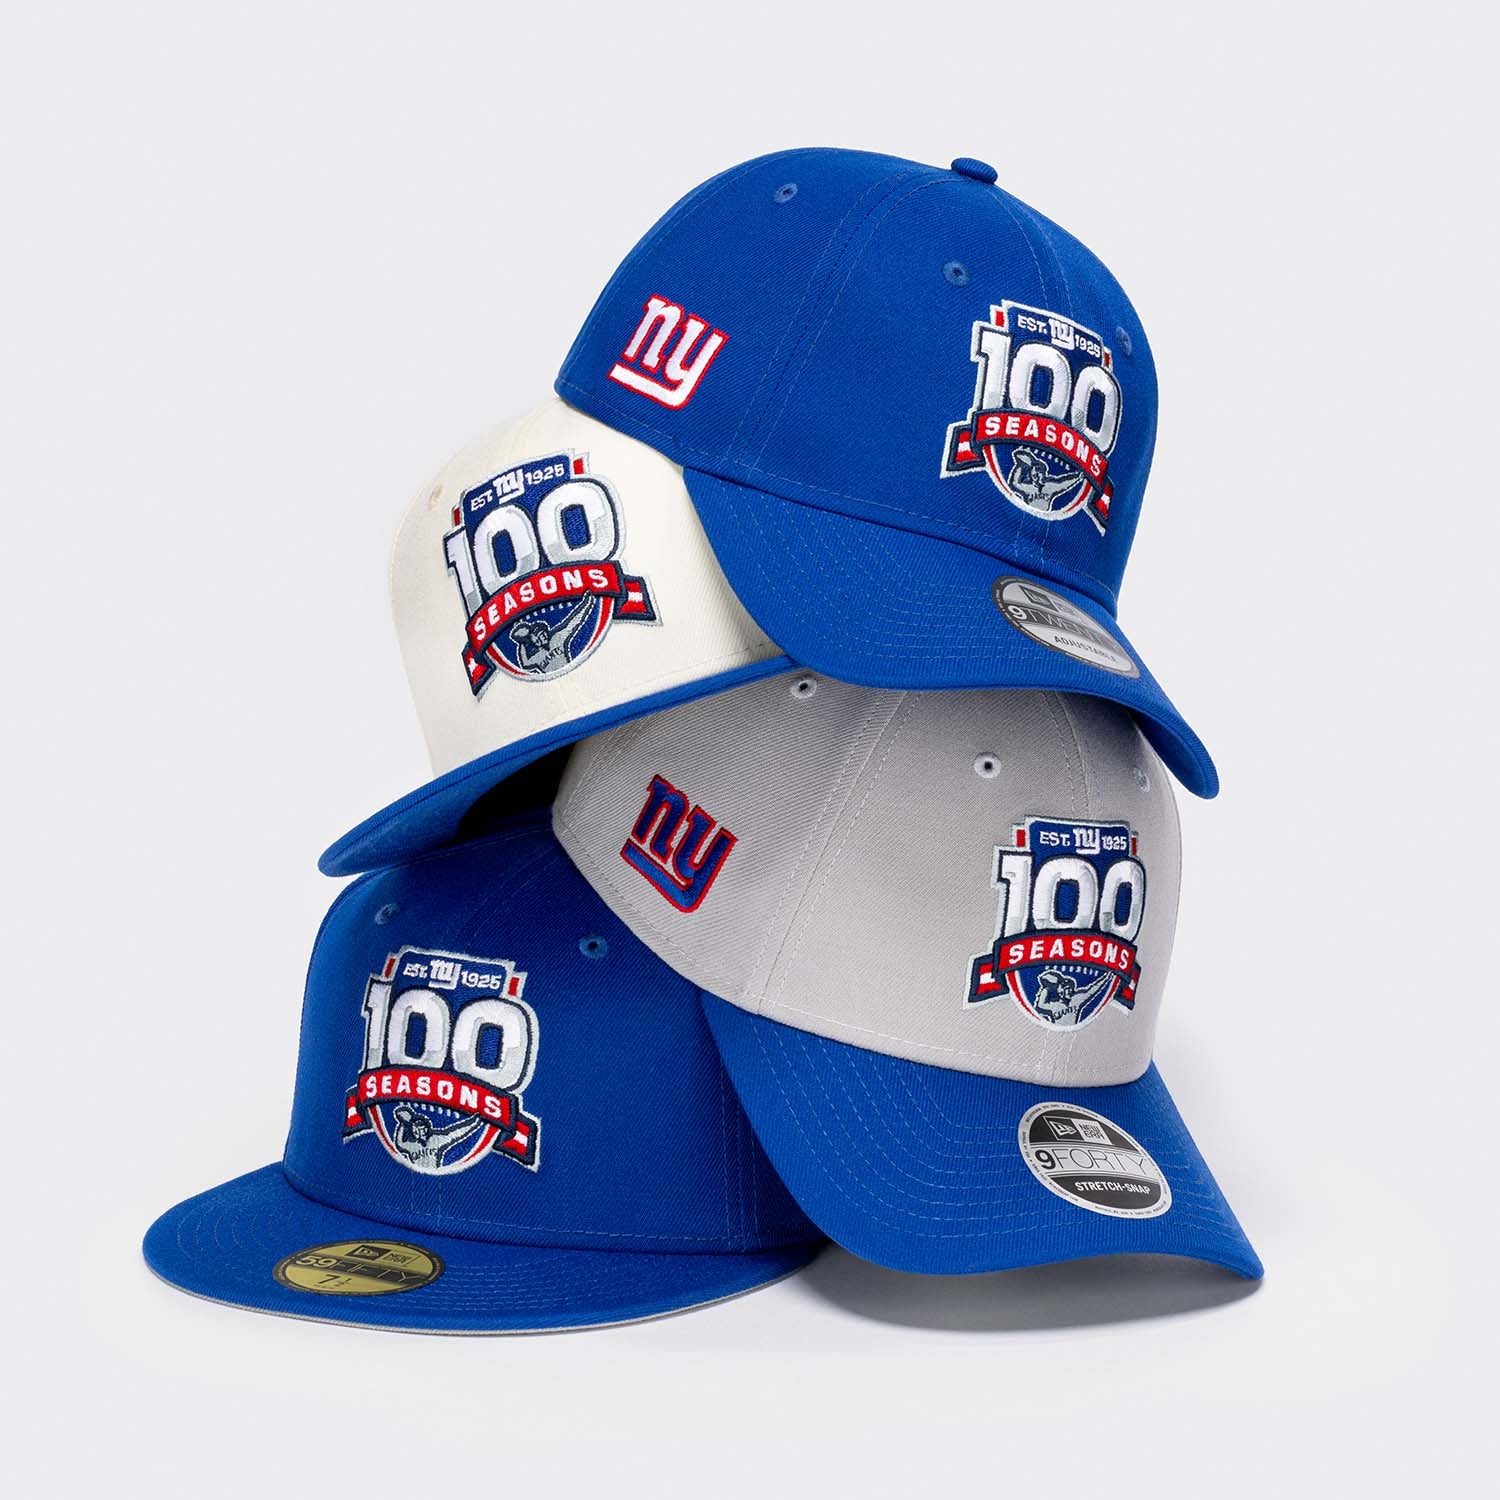 Shop the New York Giants 100th Season Collection